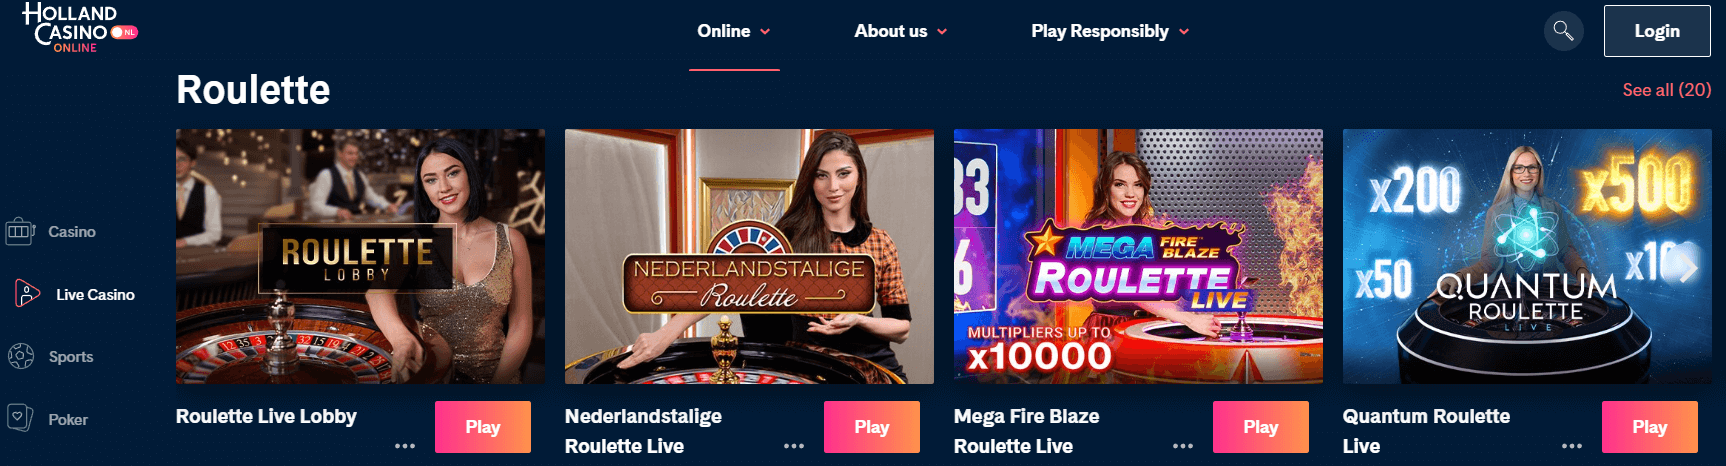 Roulette in Holland Casino